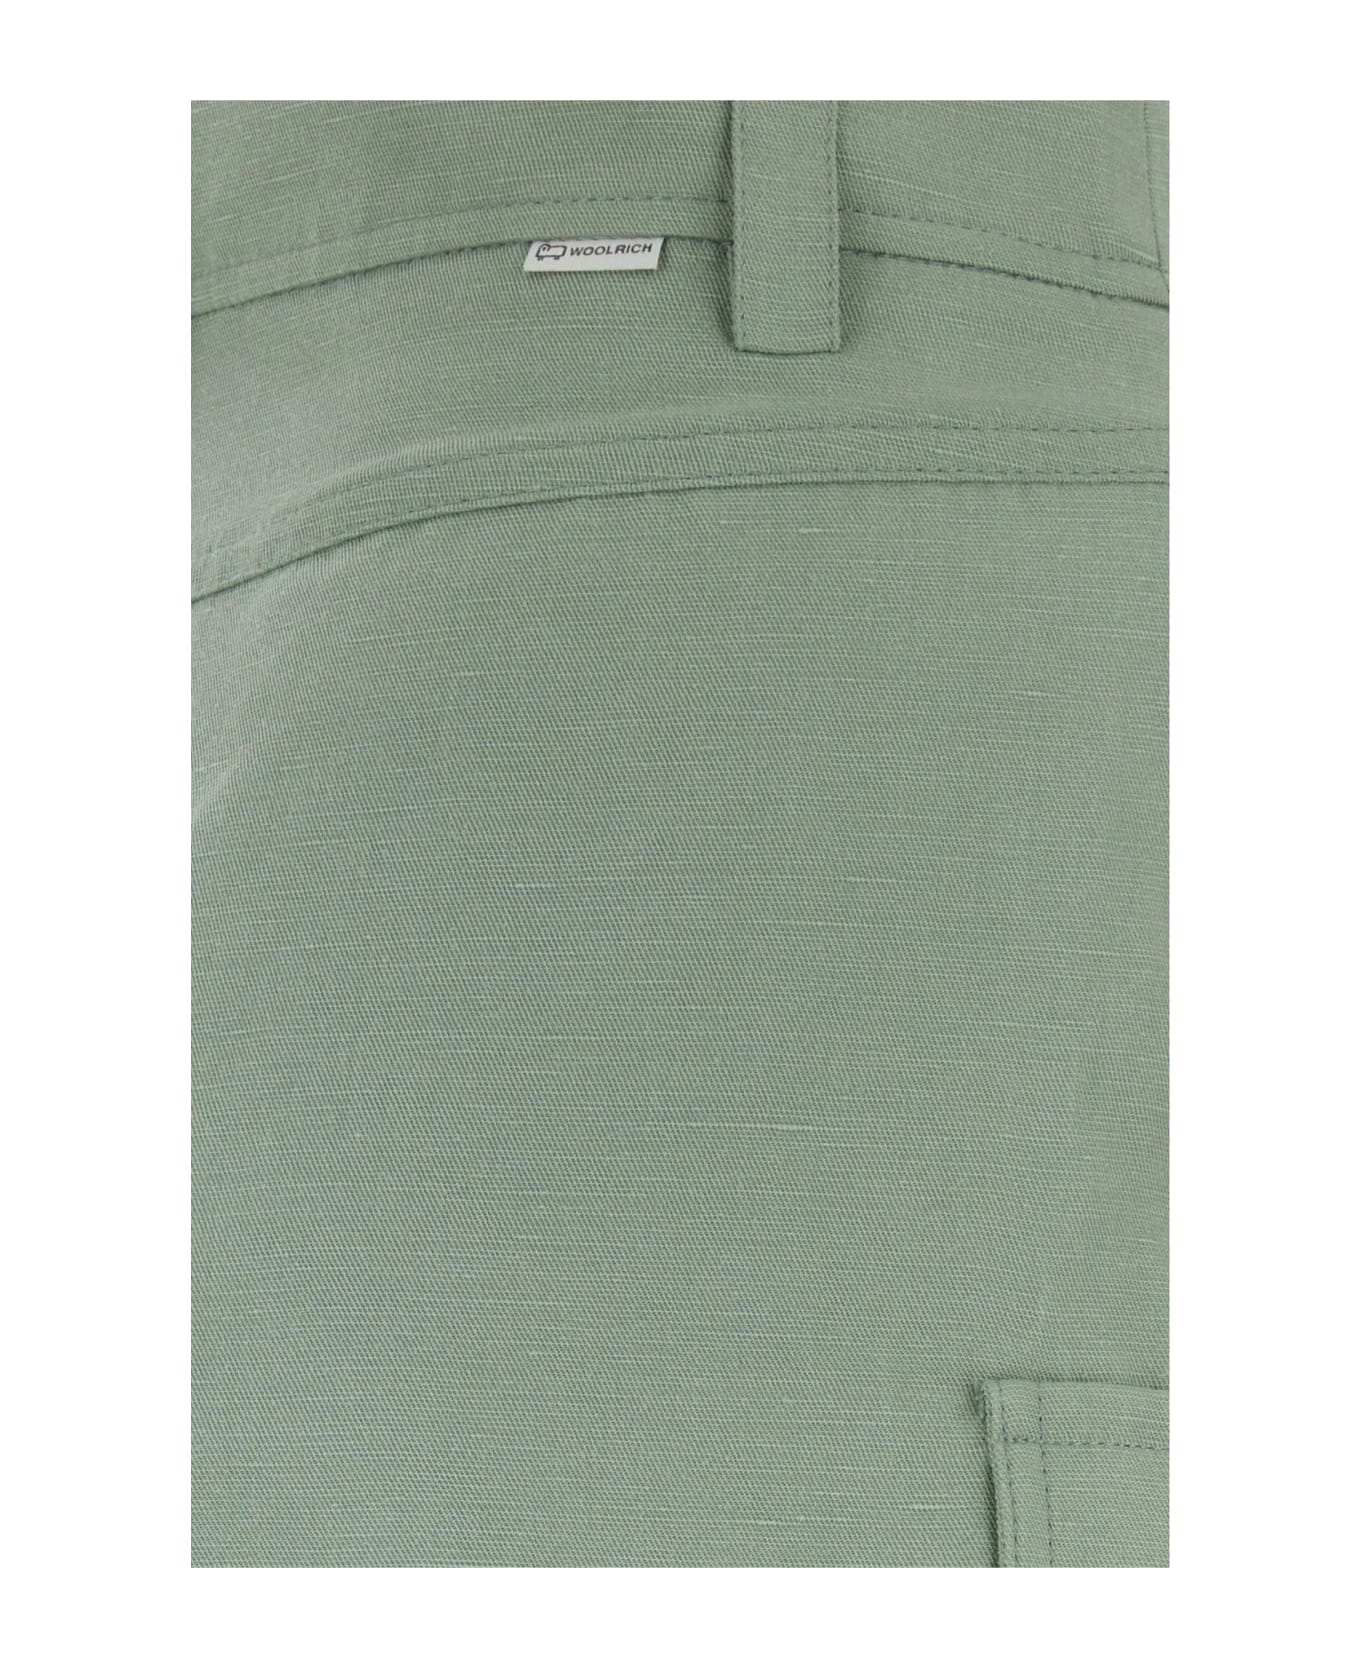 Woolrich Sage Green Viscose Blend Shorts - Verde